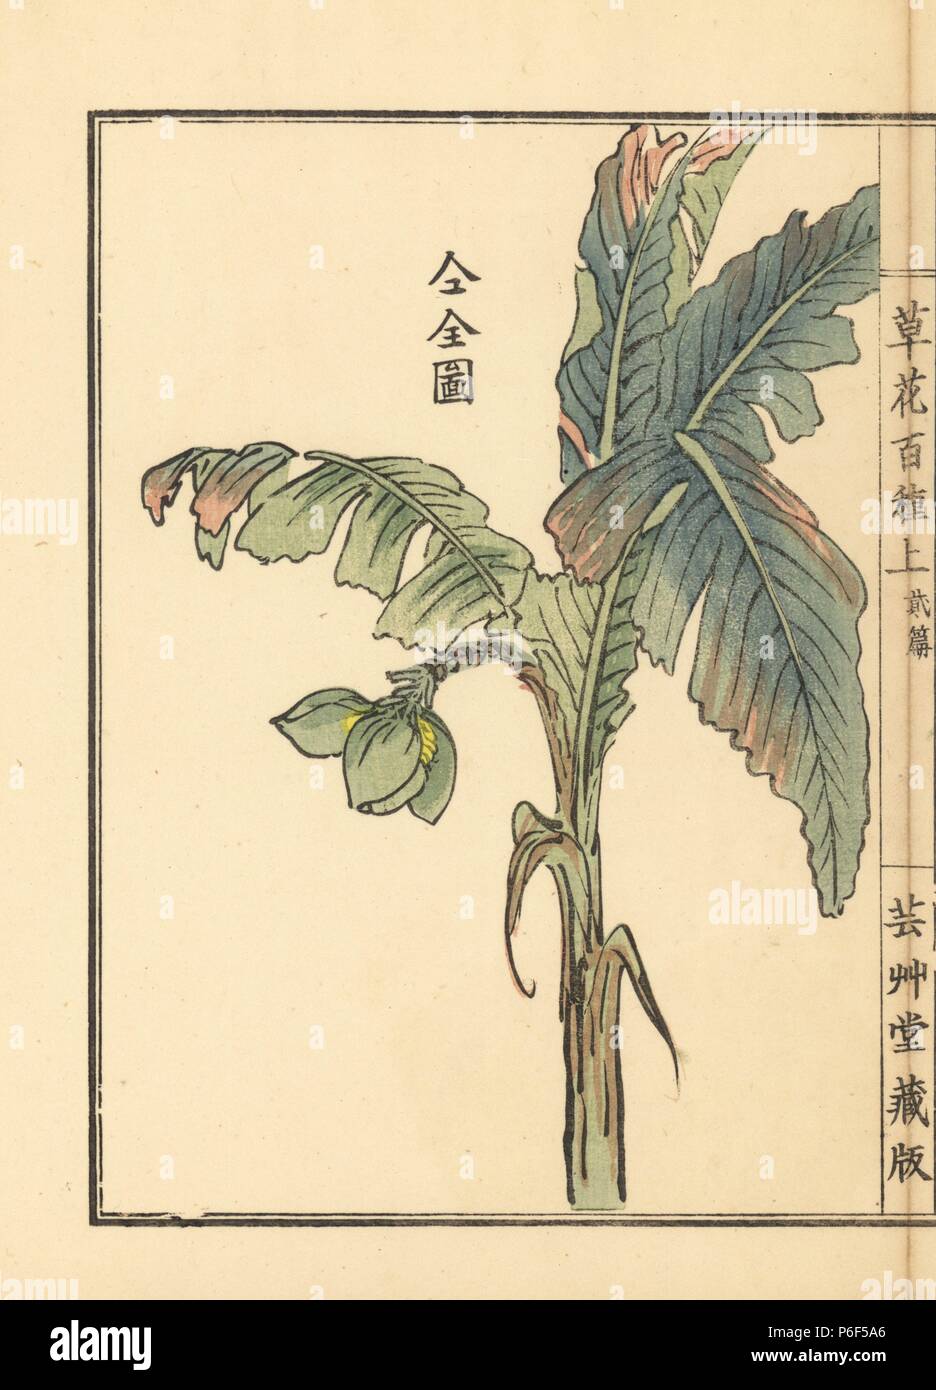 Bashou o giapponese albero di banana, Musa basjoo. Handcolored woodblock print da Kono Bairei da Kusa Bana Hyakushu (un centinaio di varietà di fiori), Tokyo, Yamada, 1901. Foto Stock